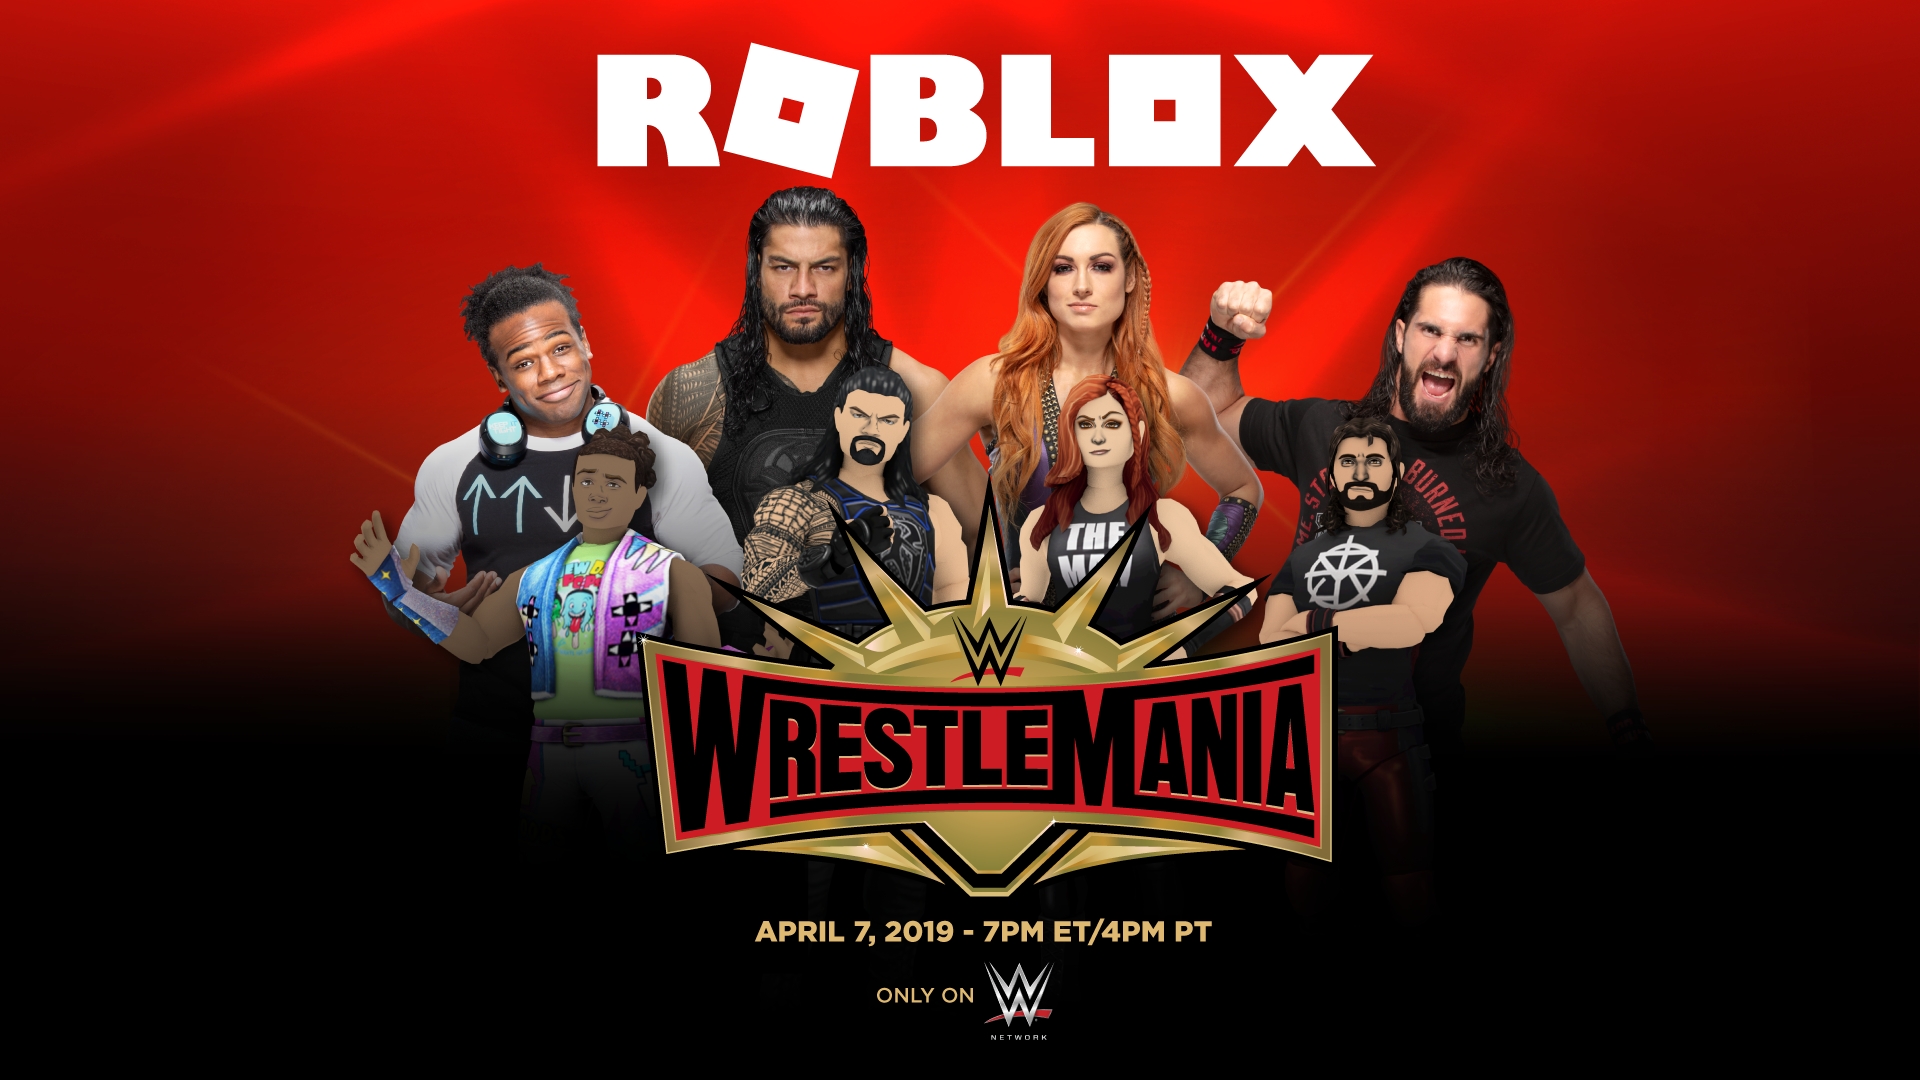 Roblox And Wwe Partner To Celebrate Wrestlemania Business Wire - wwe anuncia parceria com roblox gamevicio